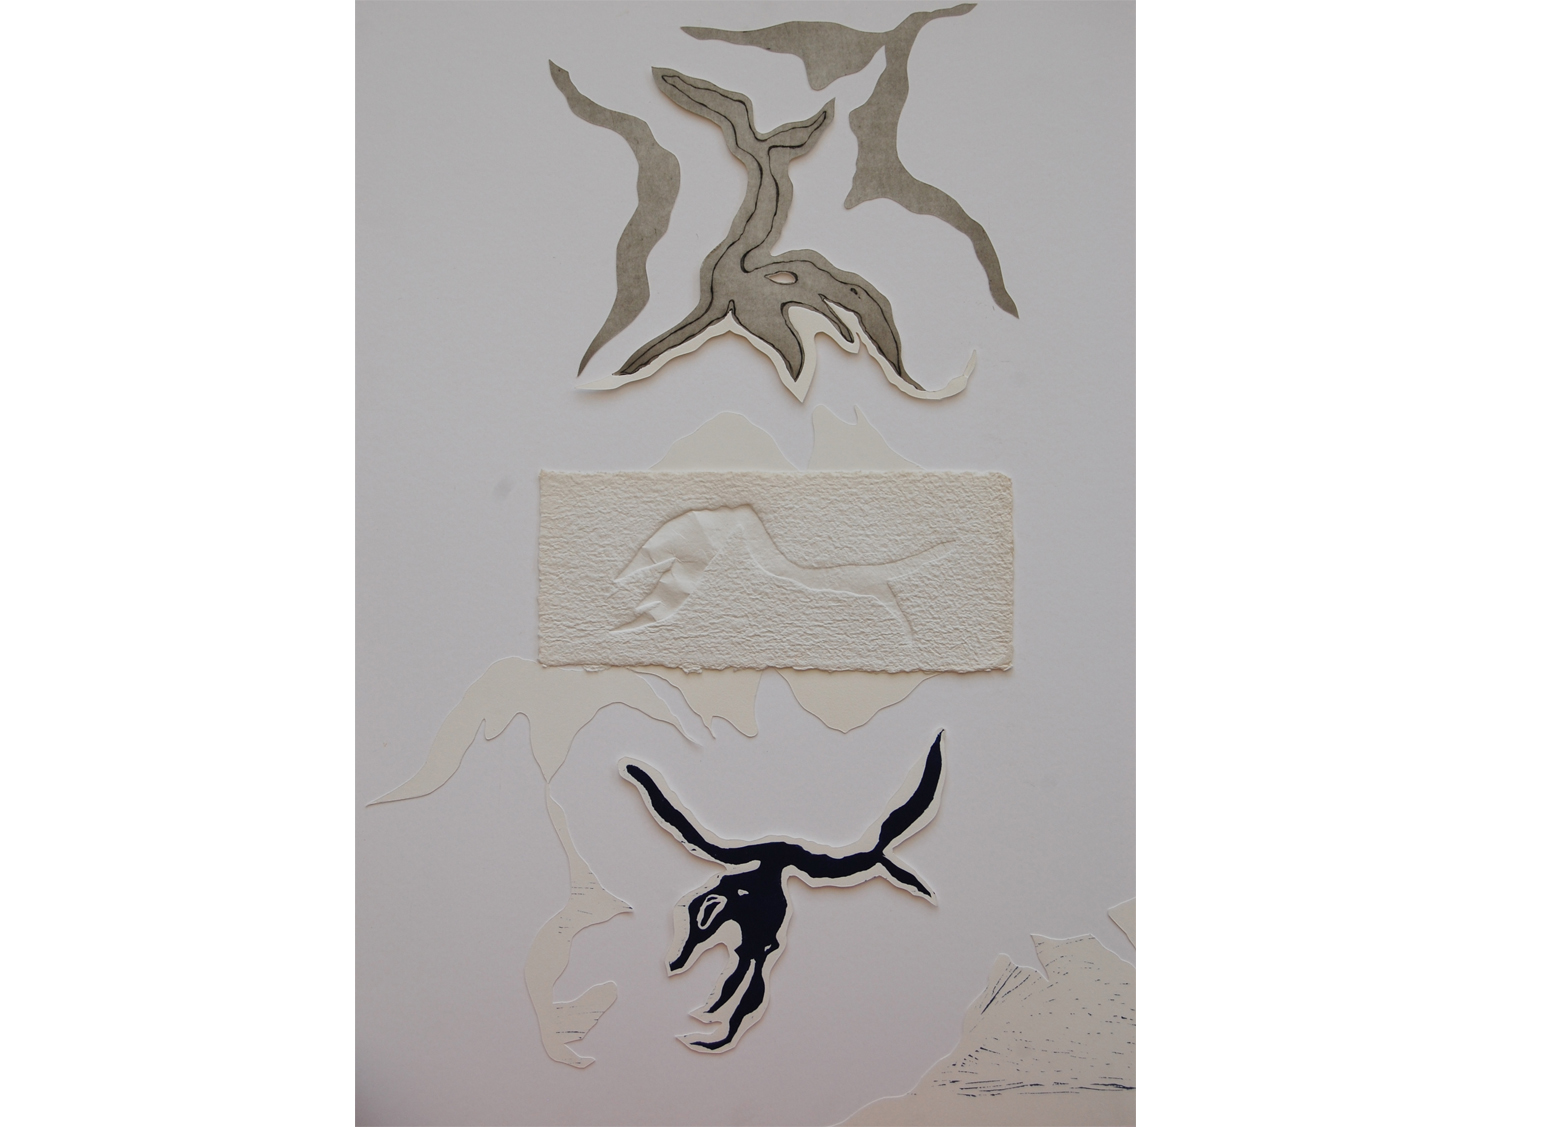 Yin-yang2, pointe-sèche, linogravure et gaufrage, 80 x 55 cm